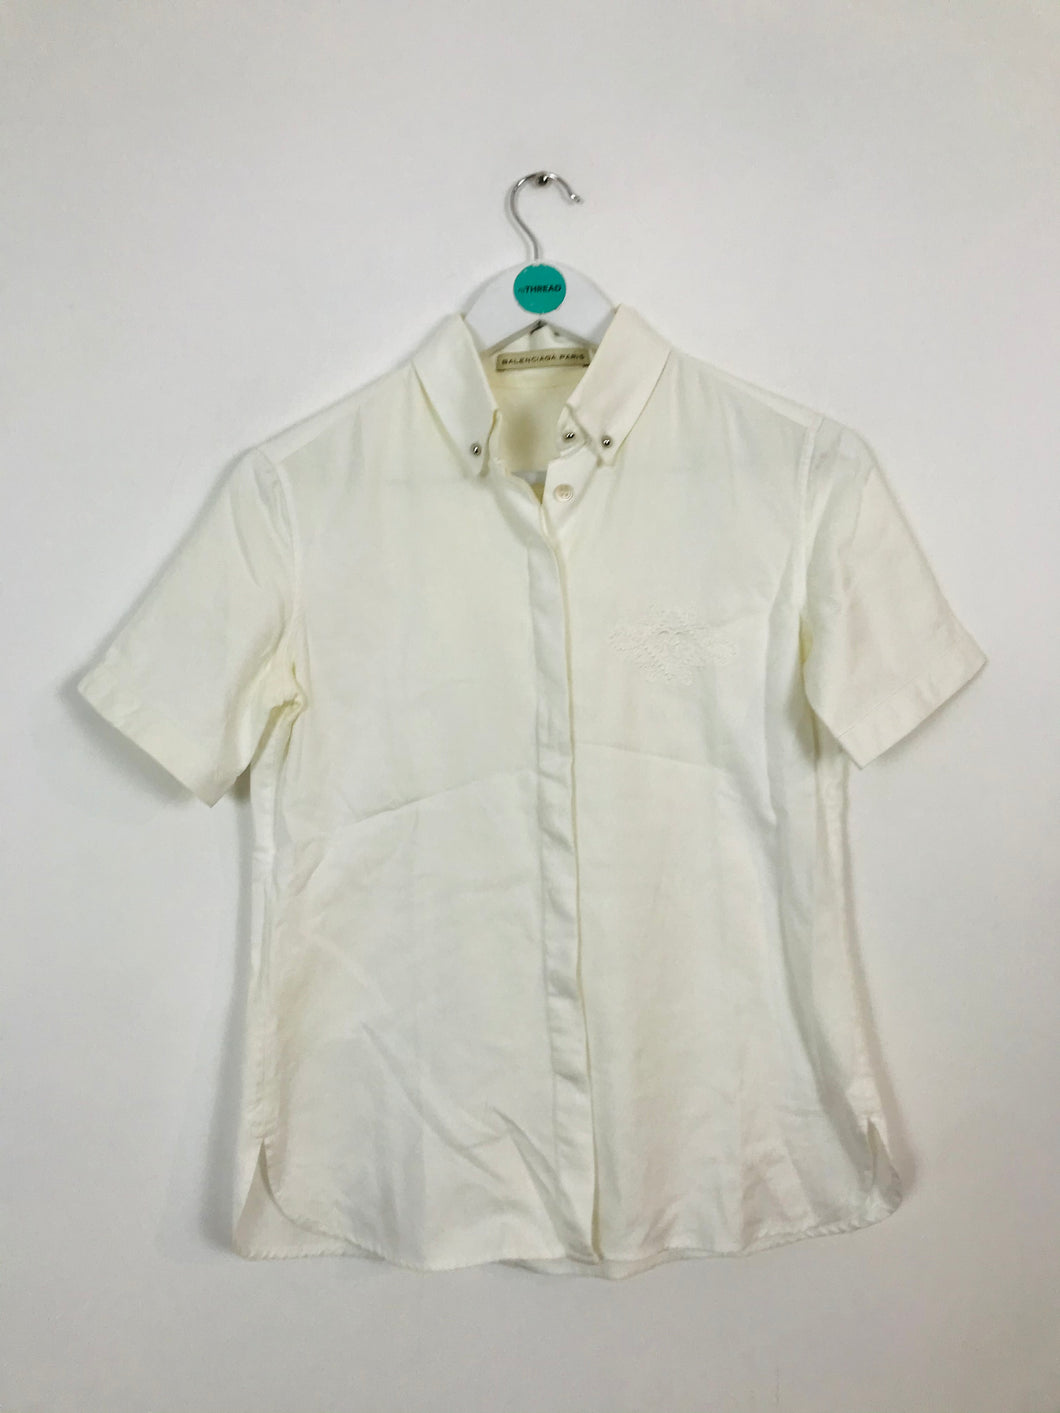 Balenciaga Women’s Button-Up Collared Shirt | 38 UK6 | White